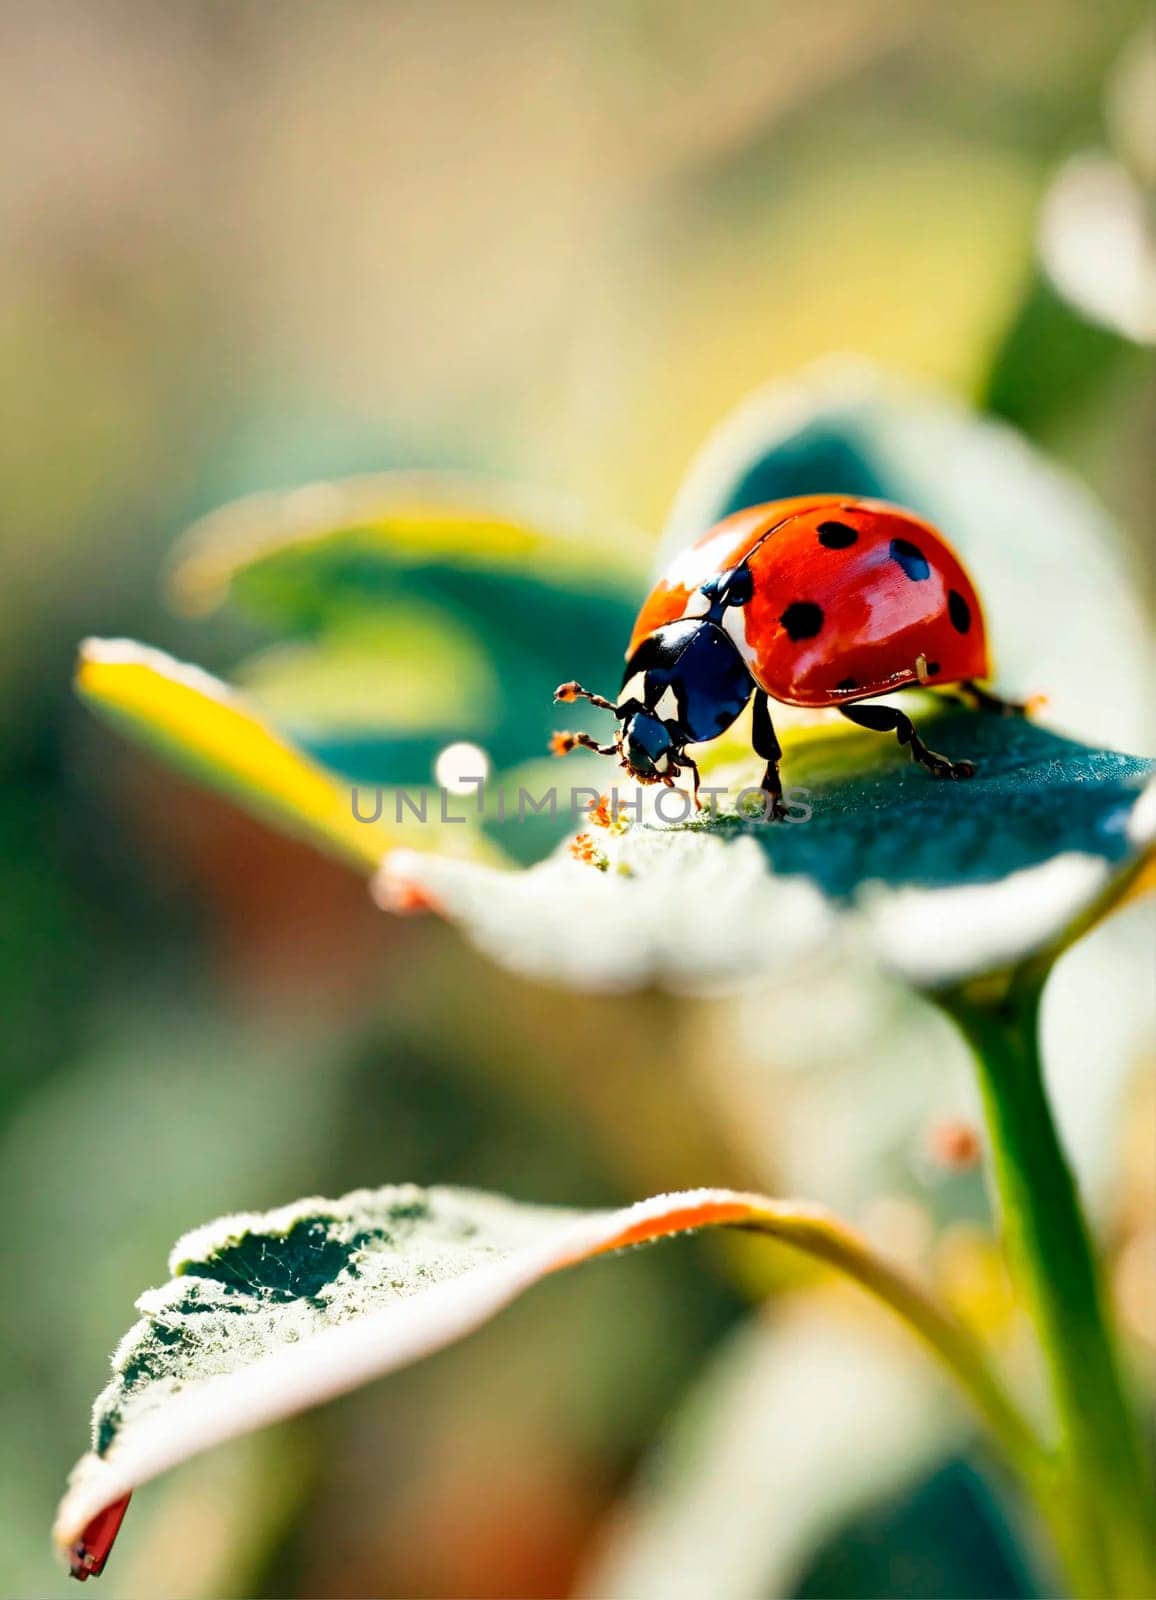 ladybug on the grass close-up. Selective focus. by yanadjana